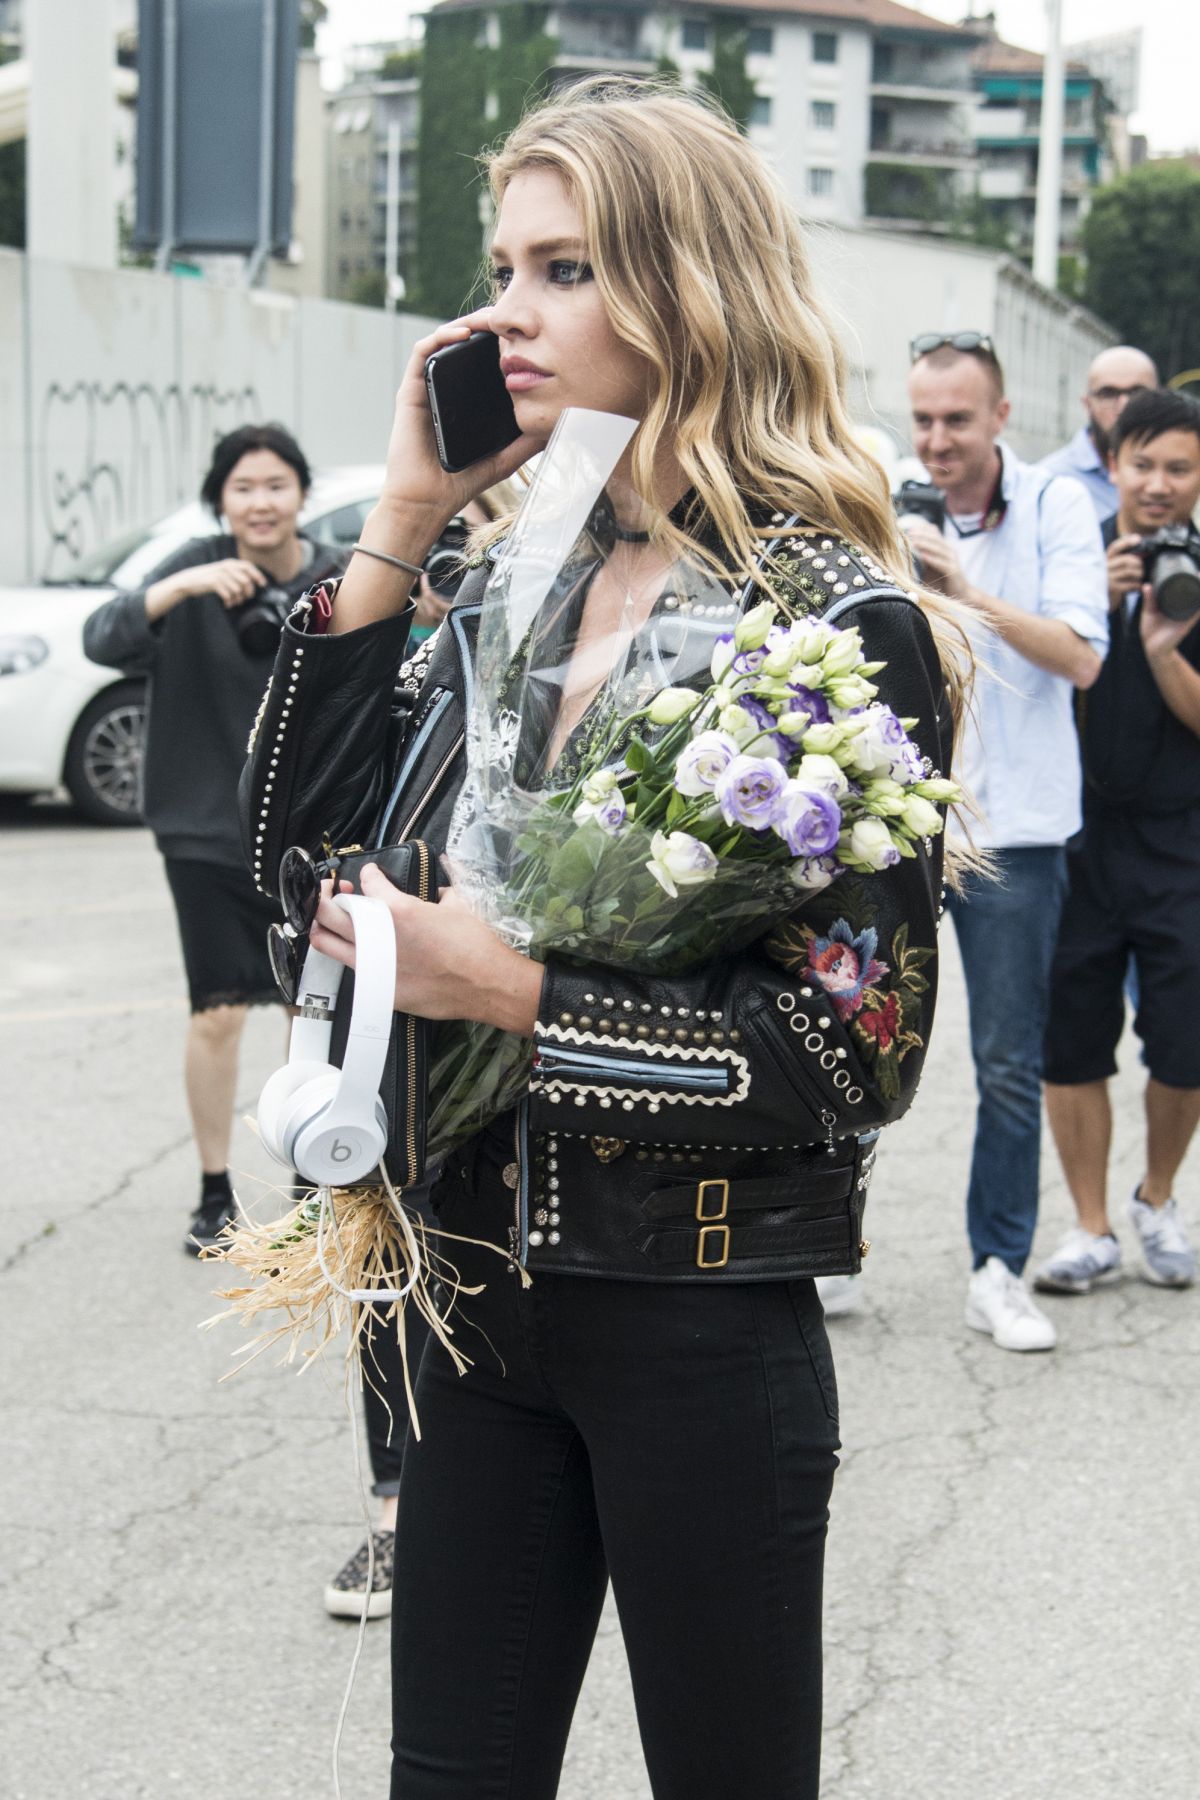 STELLA MAXWELL at Versace Fashion Show in Milan 06/18/2016 – HawtCelebs